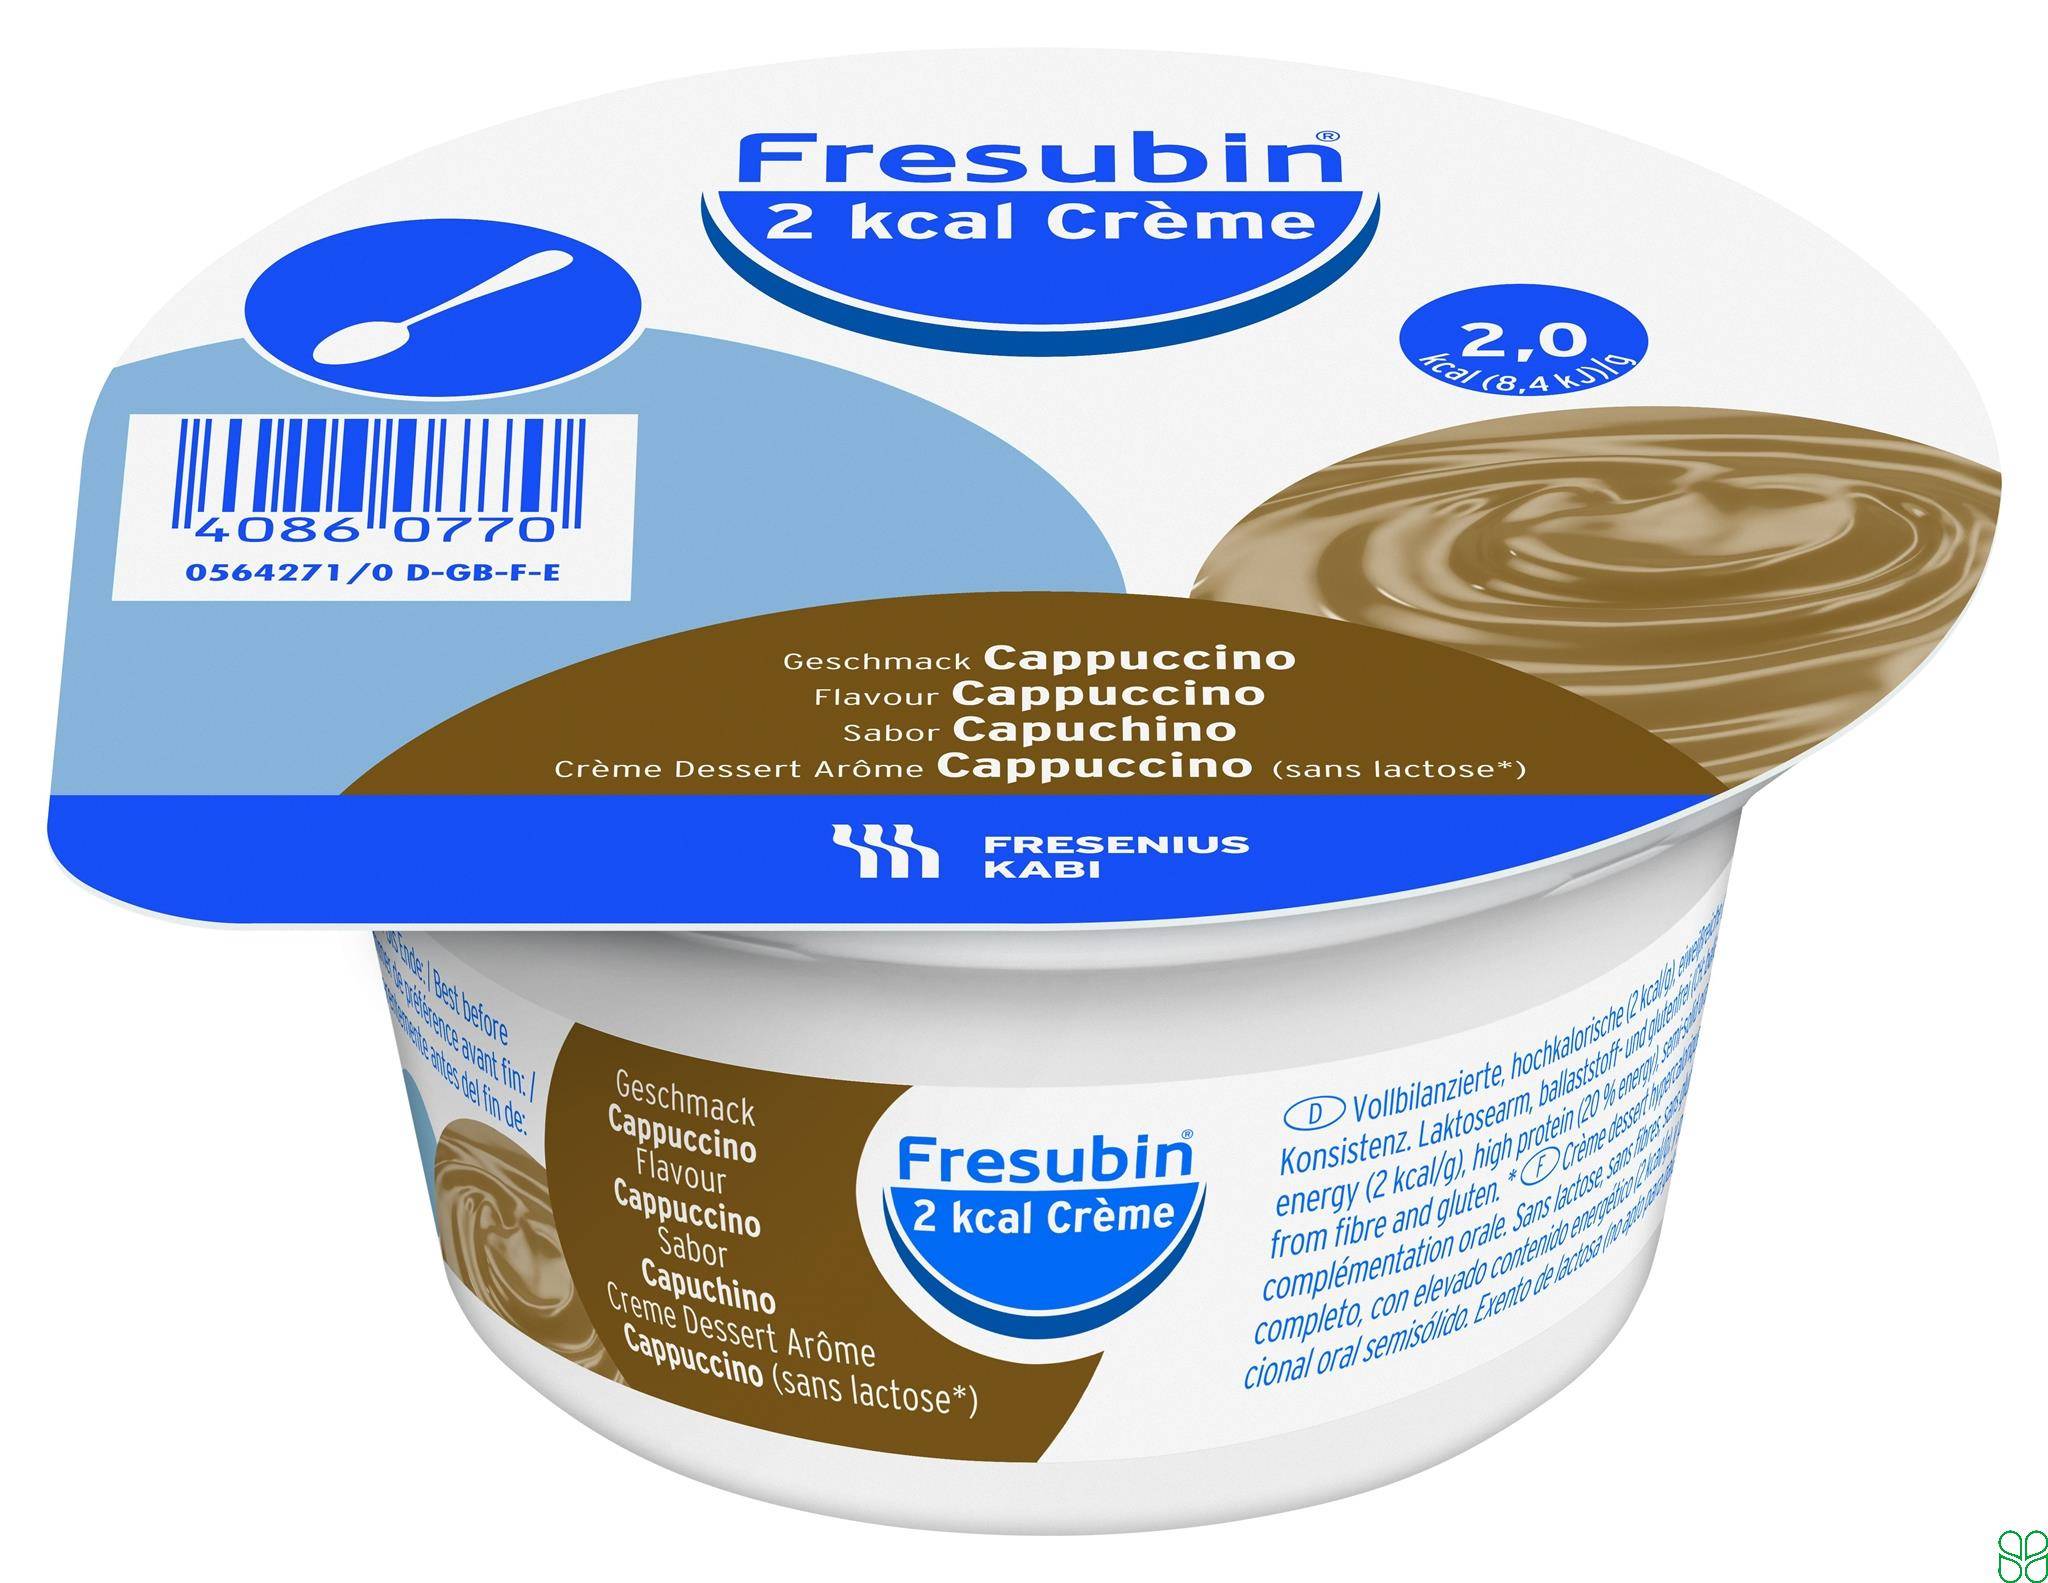 Fresubin 2 Kcal Creme Dieetvoeding Cappuccino 4x 125g